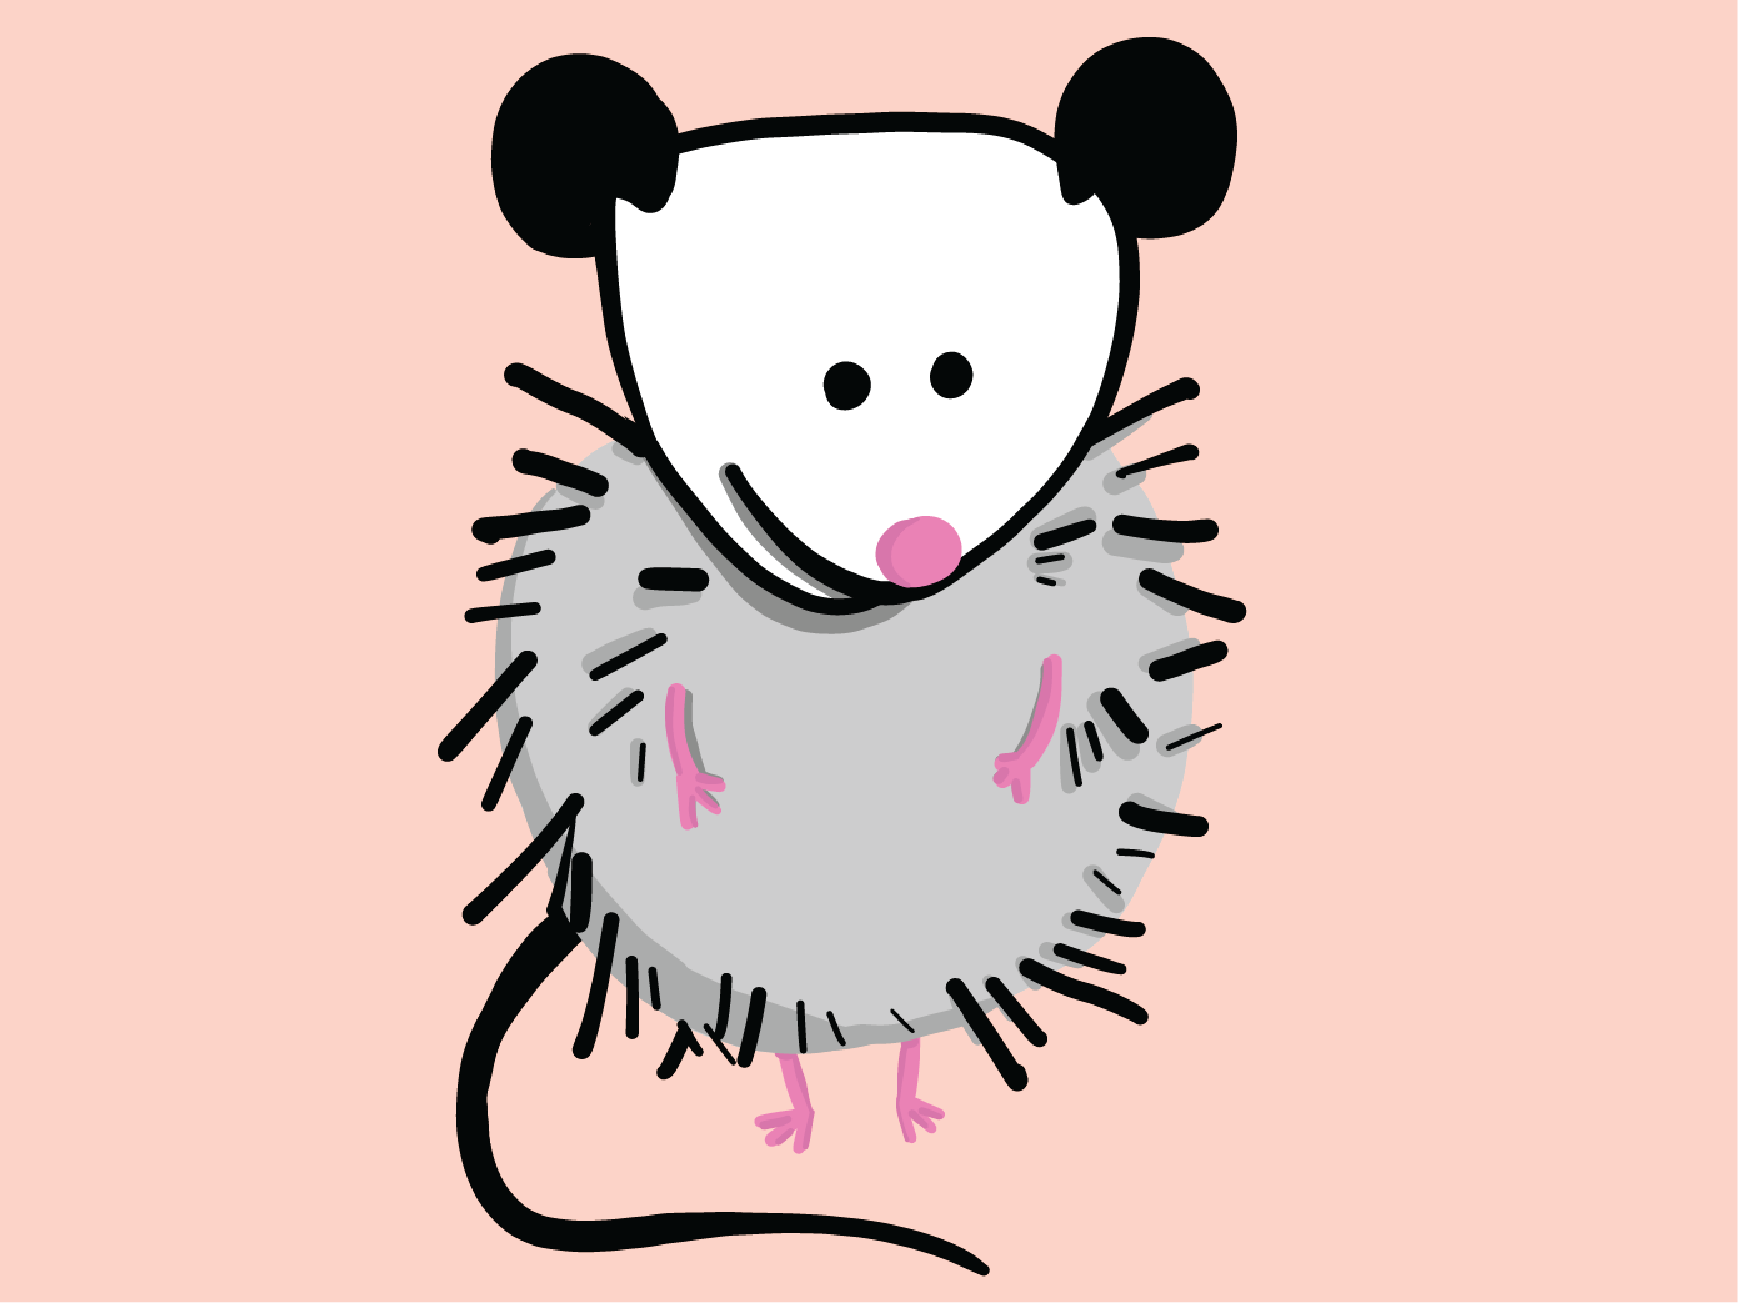 Illustration of a cute possum